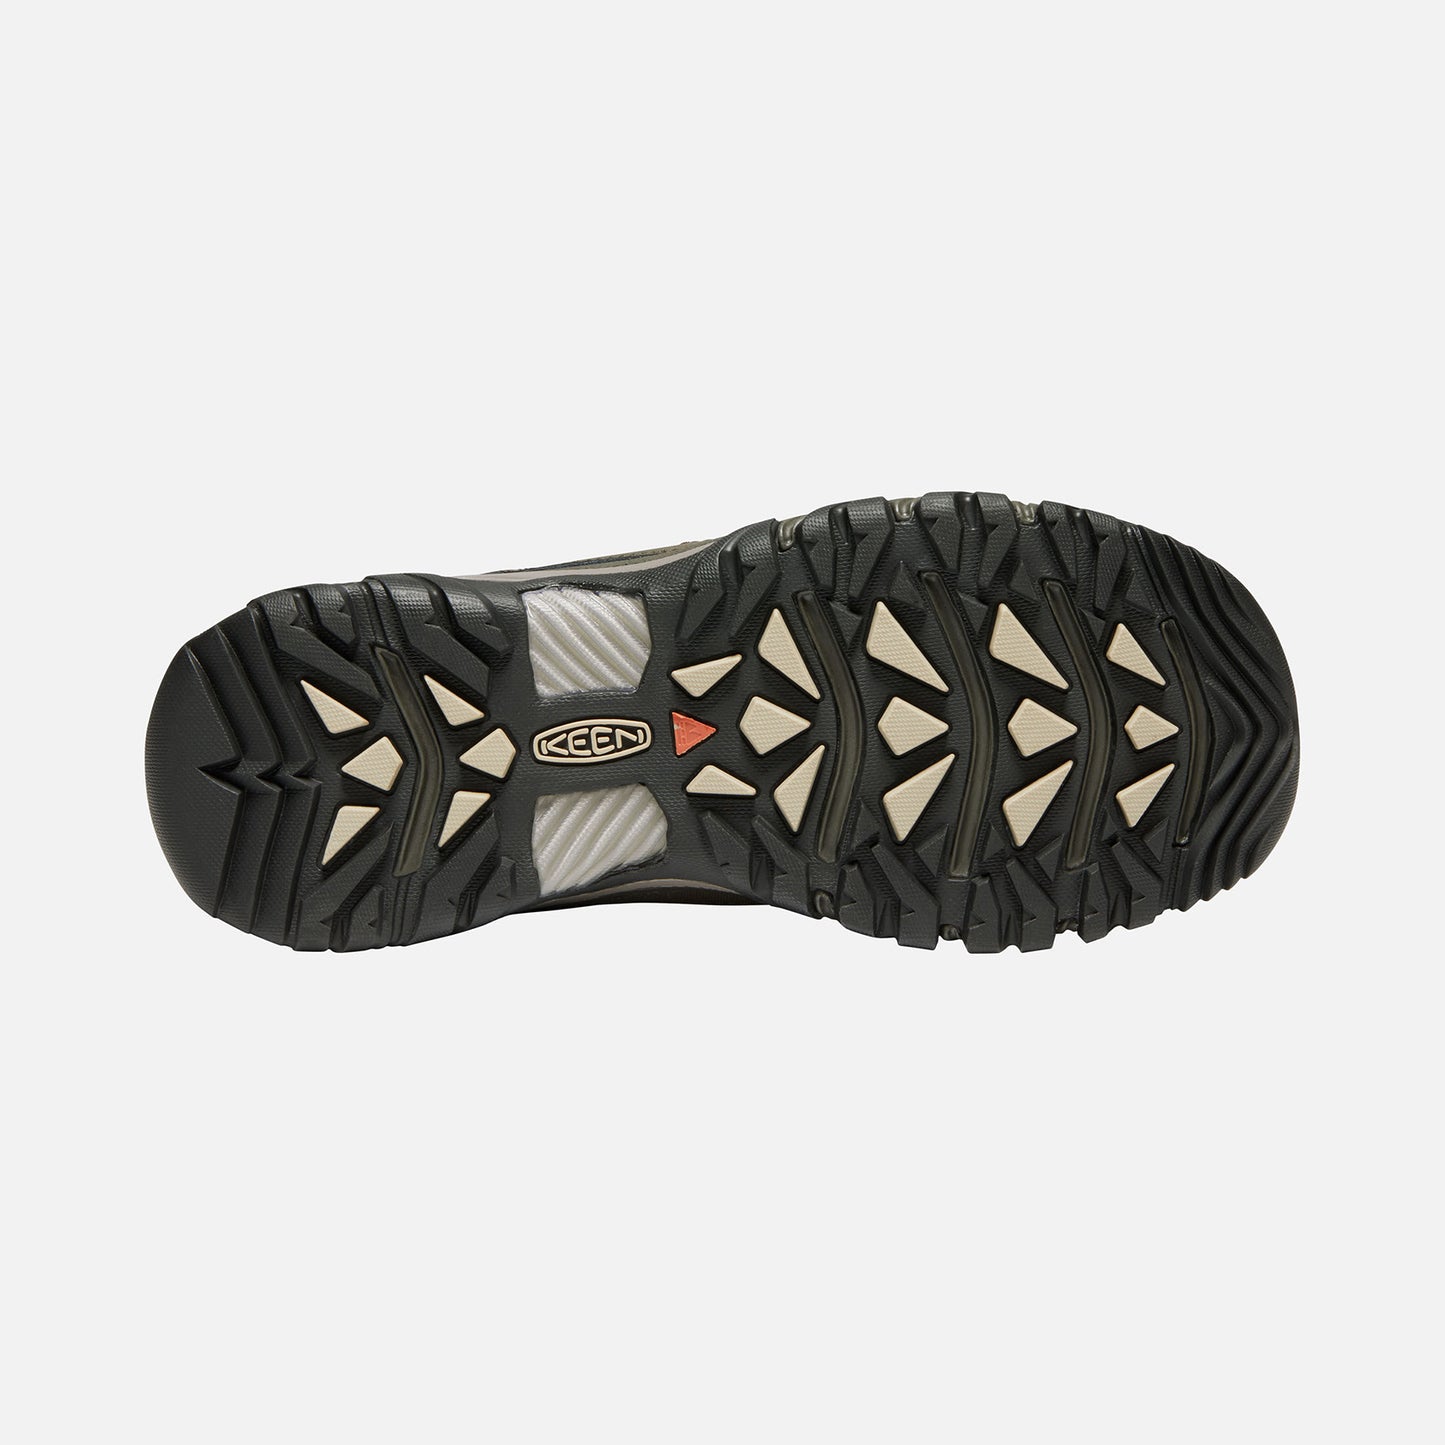 Men's Targhee III Leather Waterproof Hiking Shoe - Bungee Cord/Black - Regular (D)